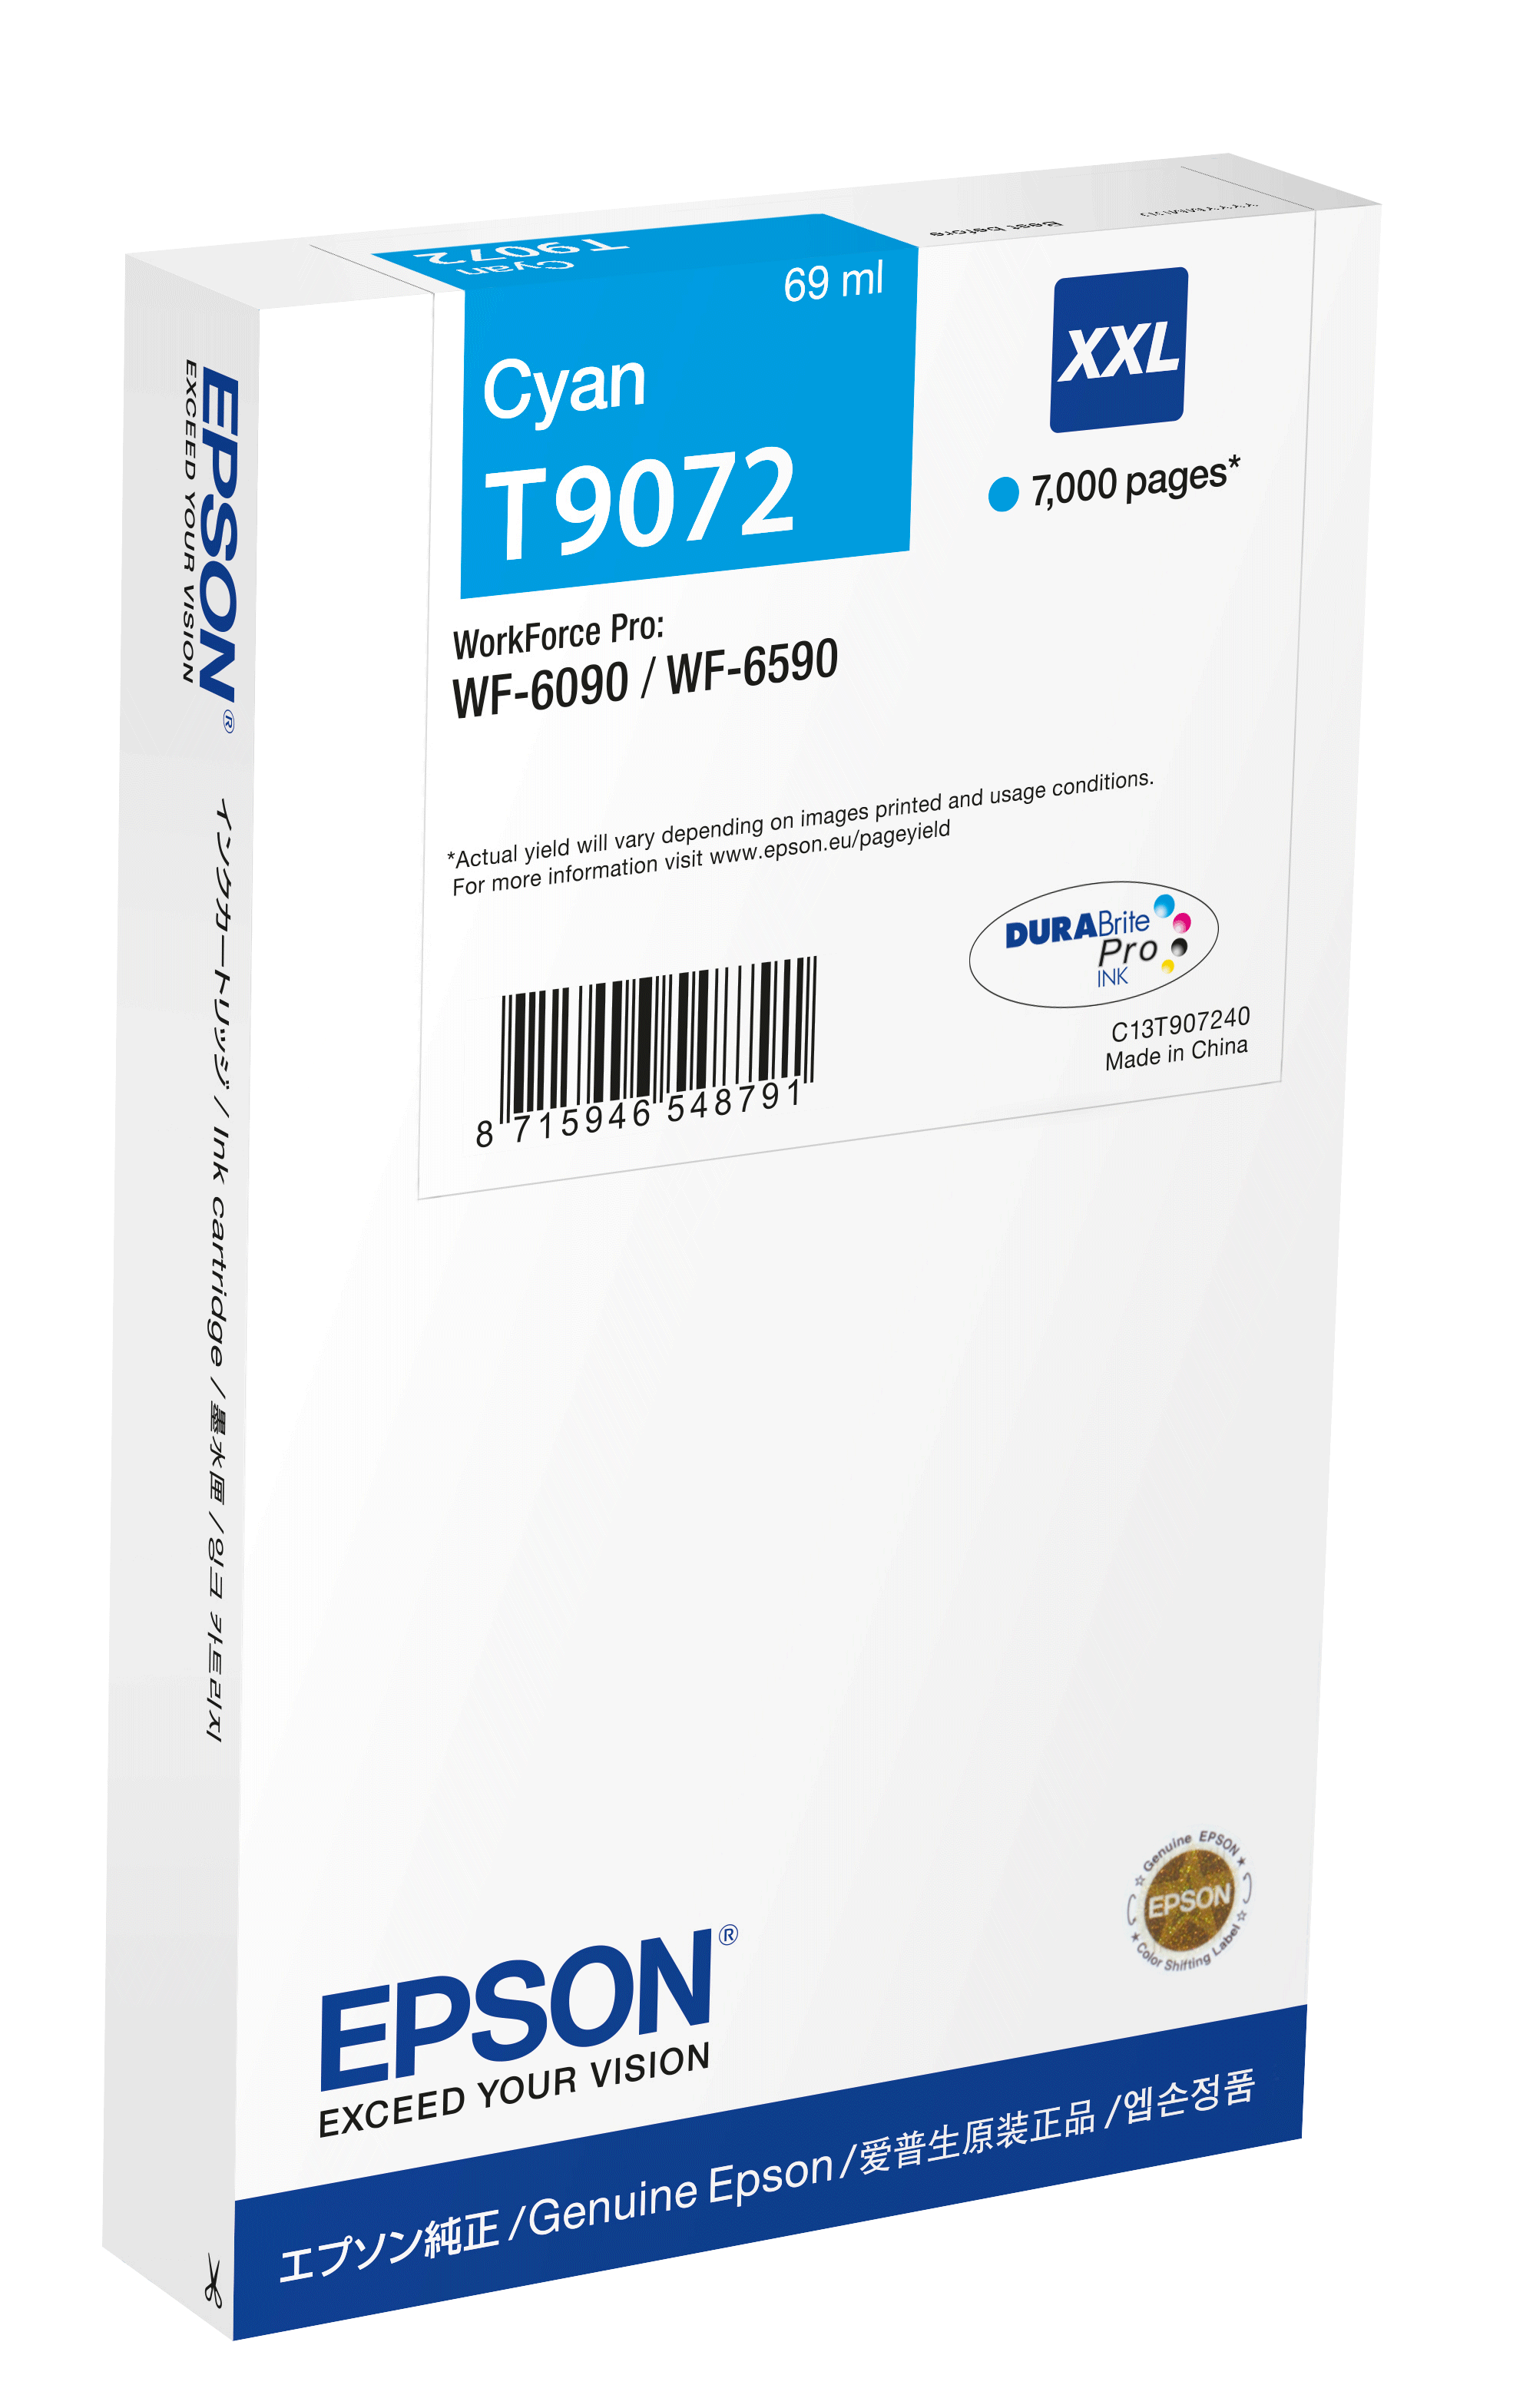 Epson WF-6xxx Ink Cartridge Cyan XXL single pack / cyaan